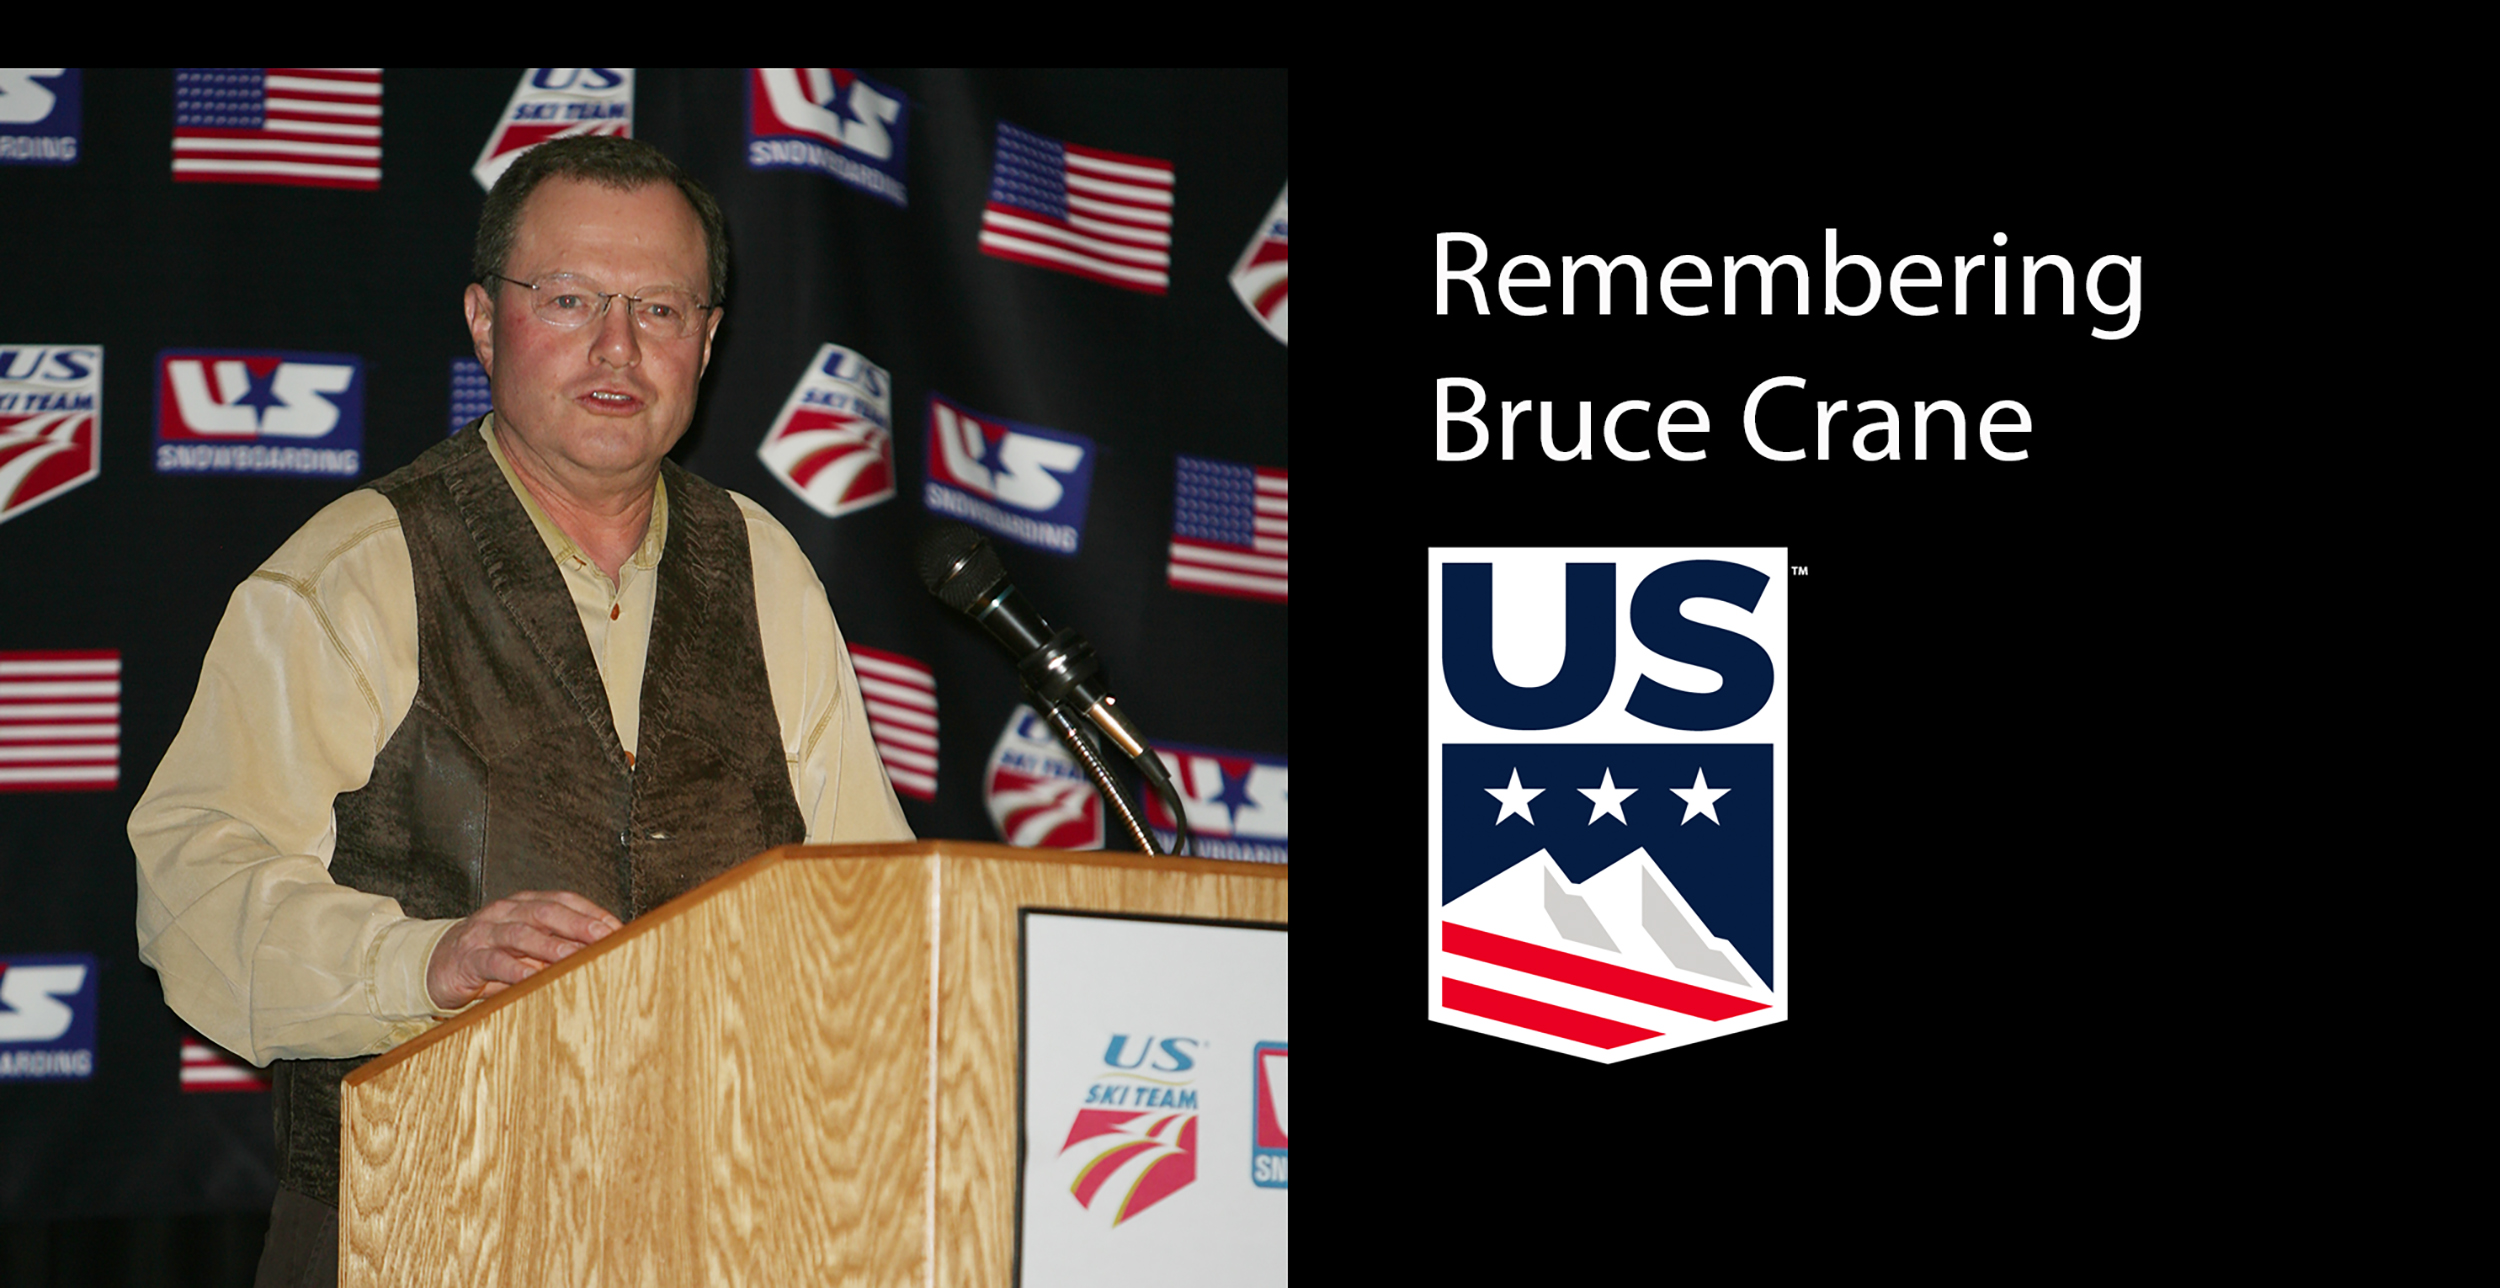 Bruce Crane